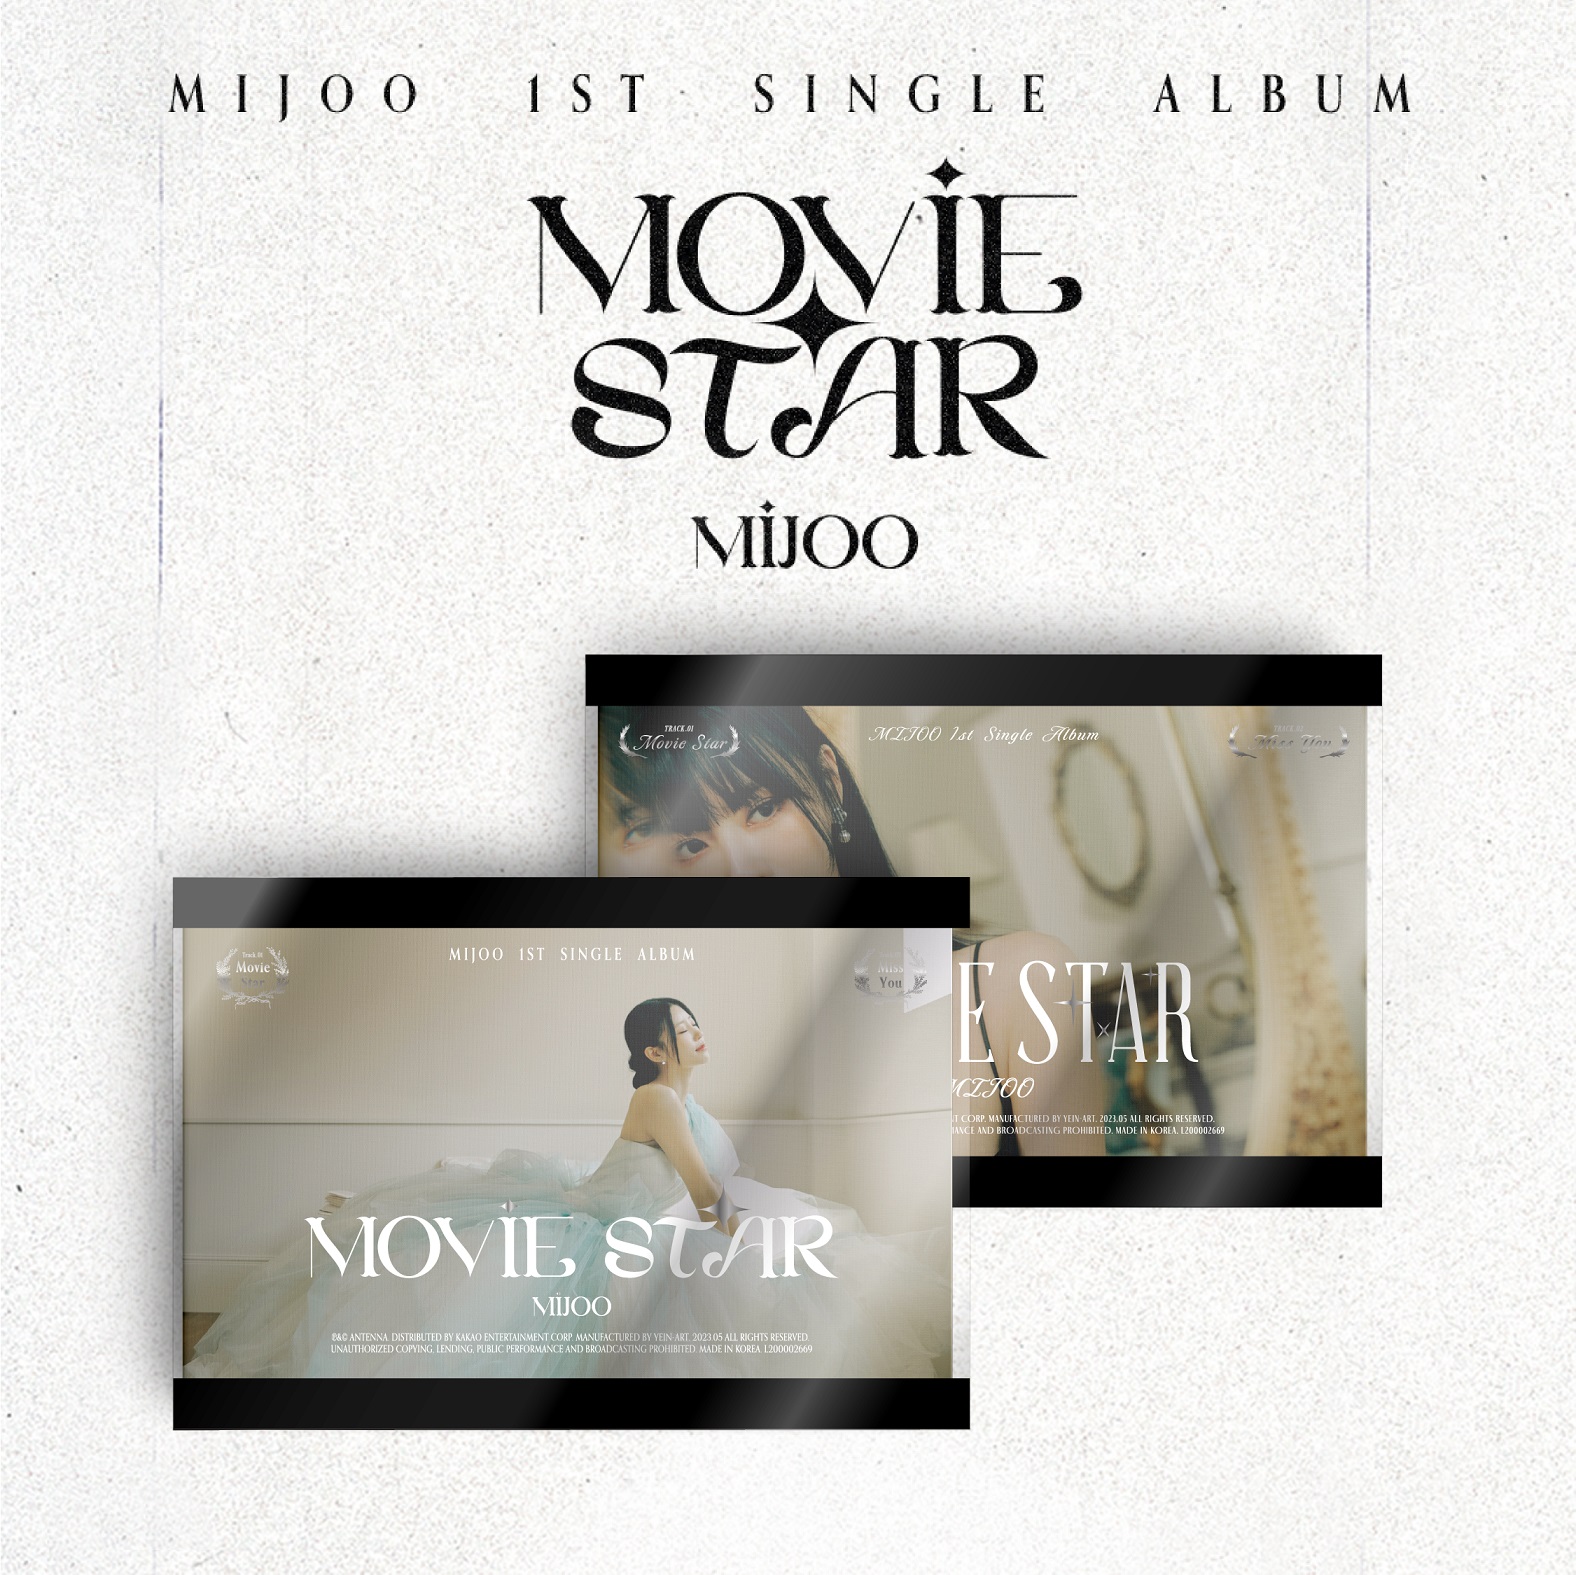 [全款 裸专 第二批 截止至5.24.早7点] [2CD 套装] MIJOO - 单曲1辑 [Movie Star] (Modern Ver. + Classic Ver.)_NiceToMeetJoo_李美珠